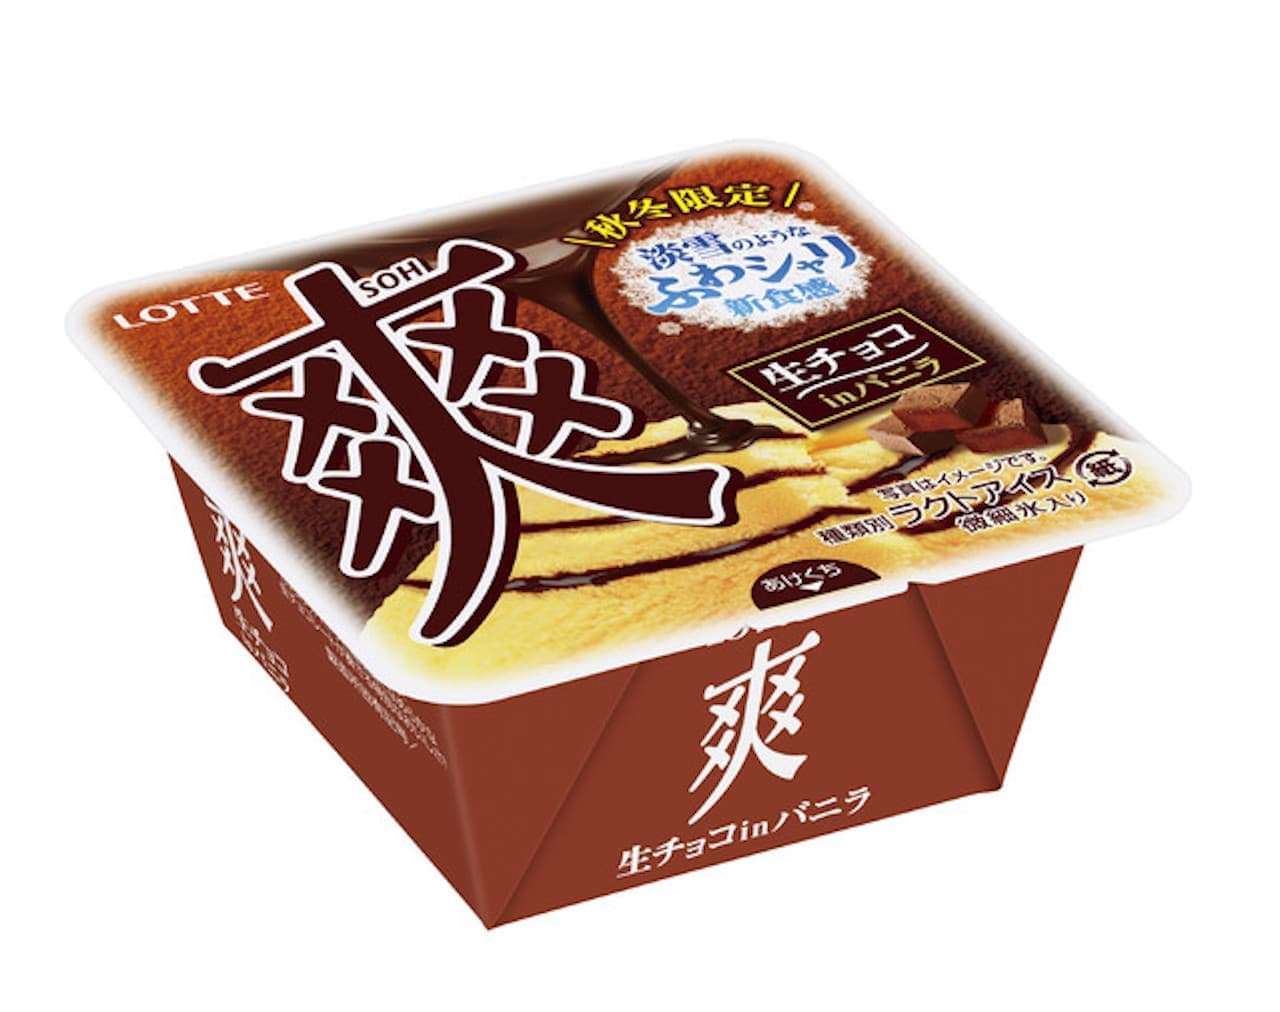 Lotte "fresh chocolate in vanilla"